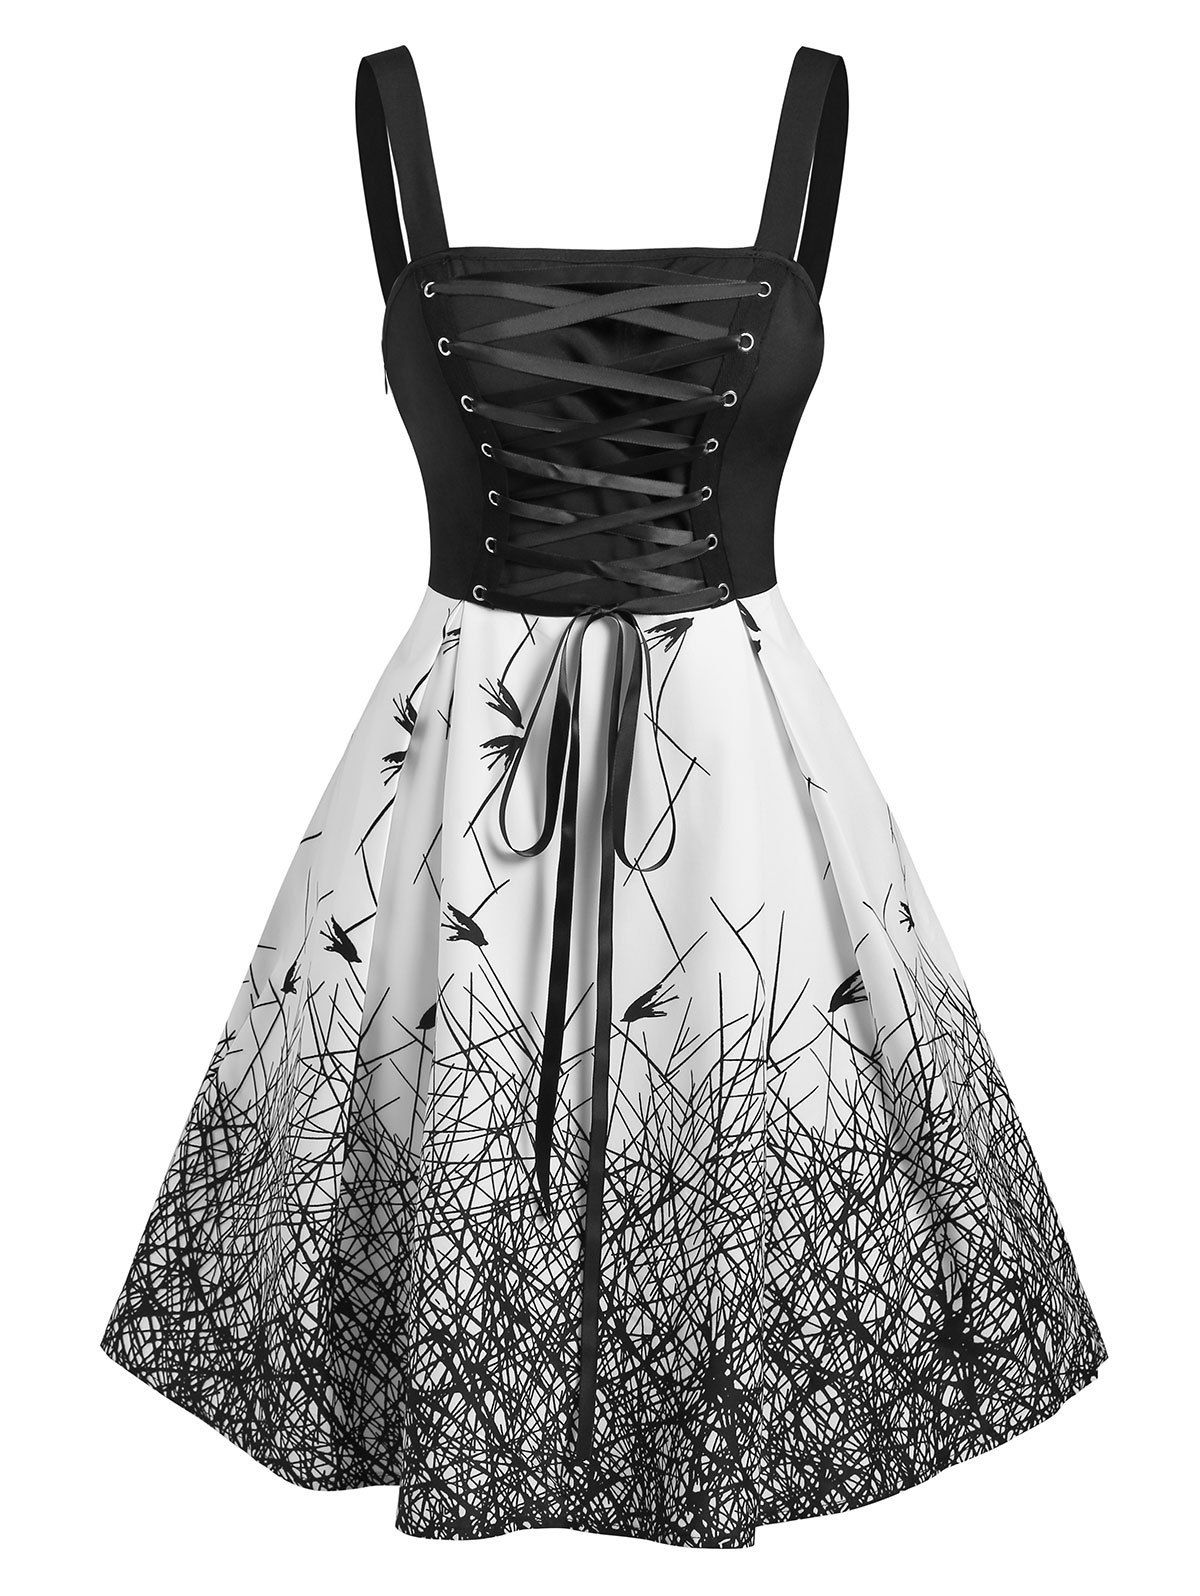 Gothic Lace Up Printed Corset Style A Line Mini Dress - BLACK XXXL